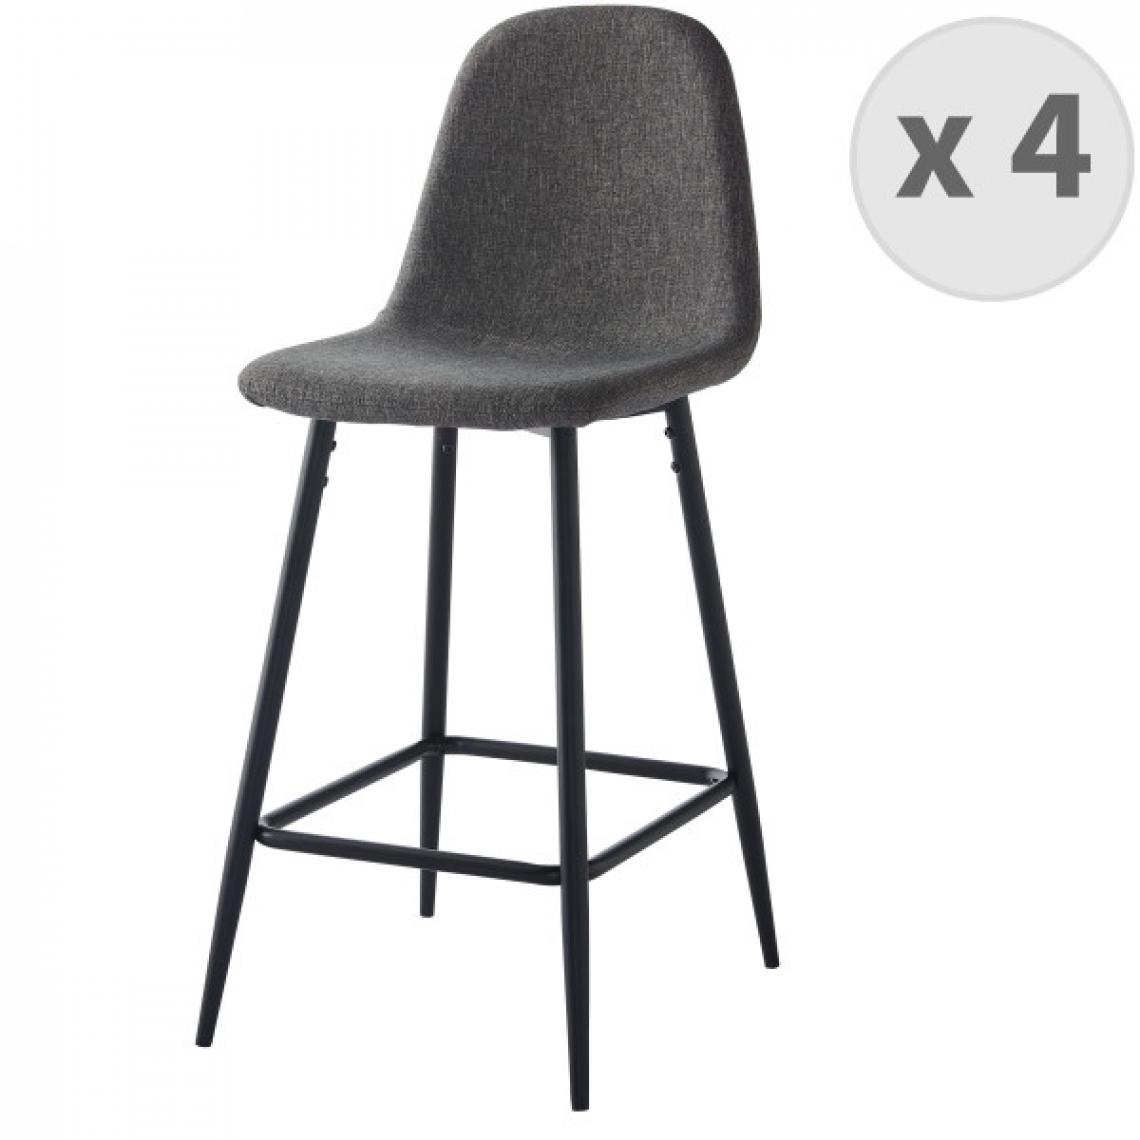 Moloo - MANCHESTER - Chaise de bar scandinave tissu gris anthracite pieds métal noir (x4) - Tabourets